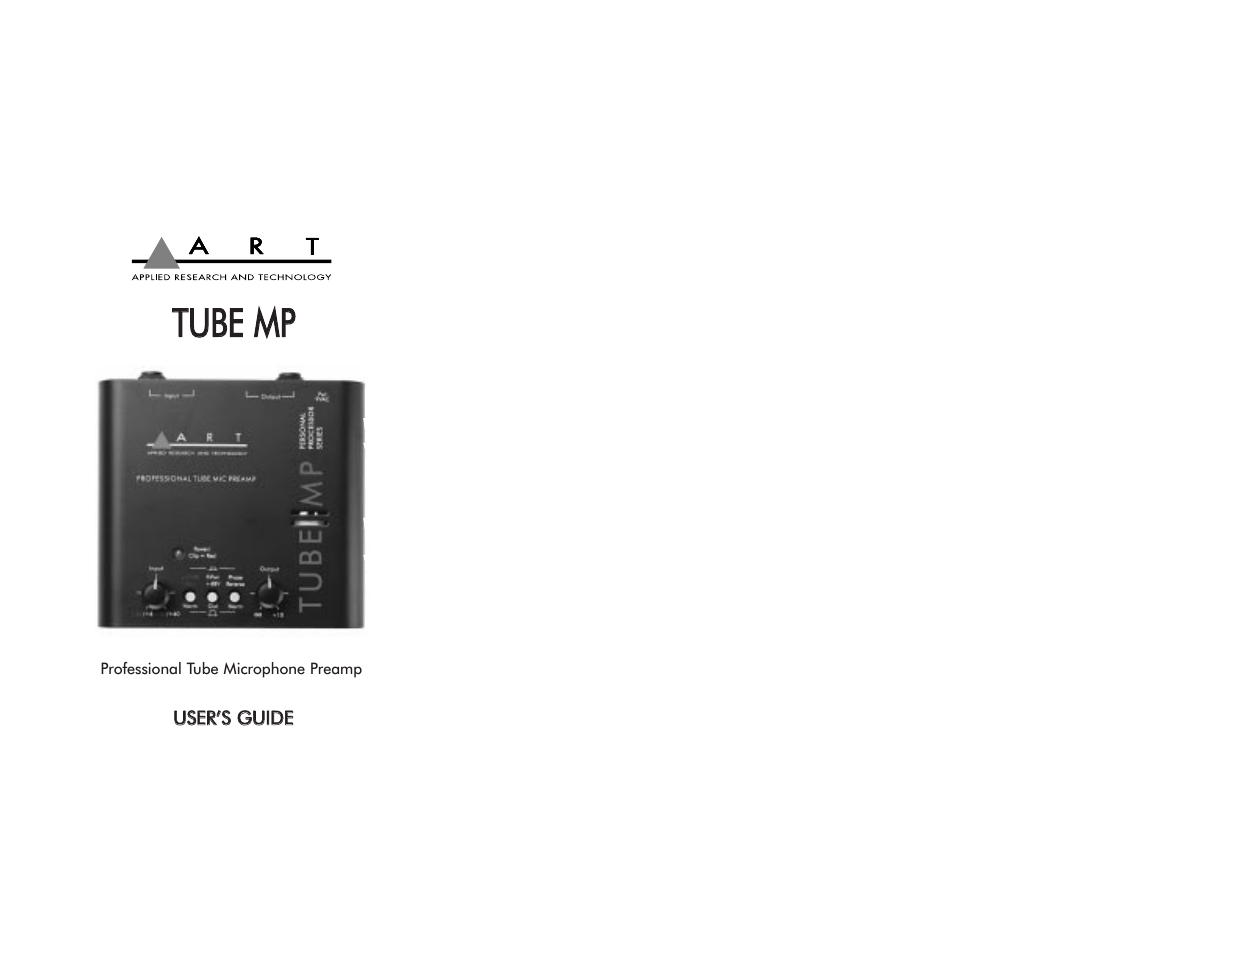 Tube MP - The Original